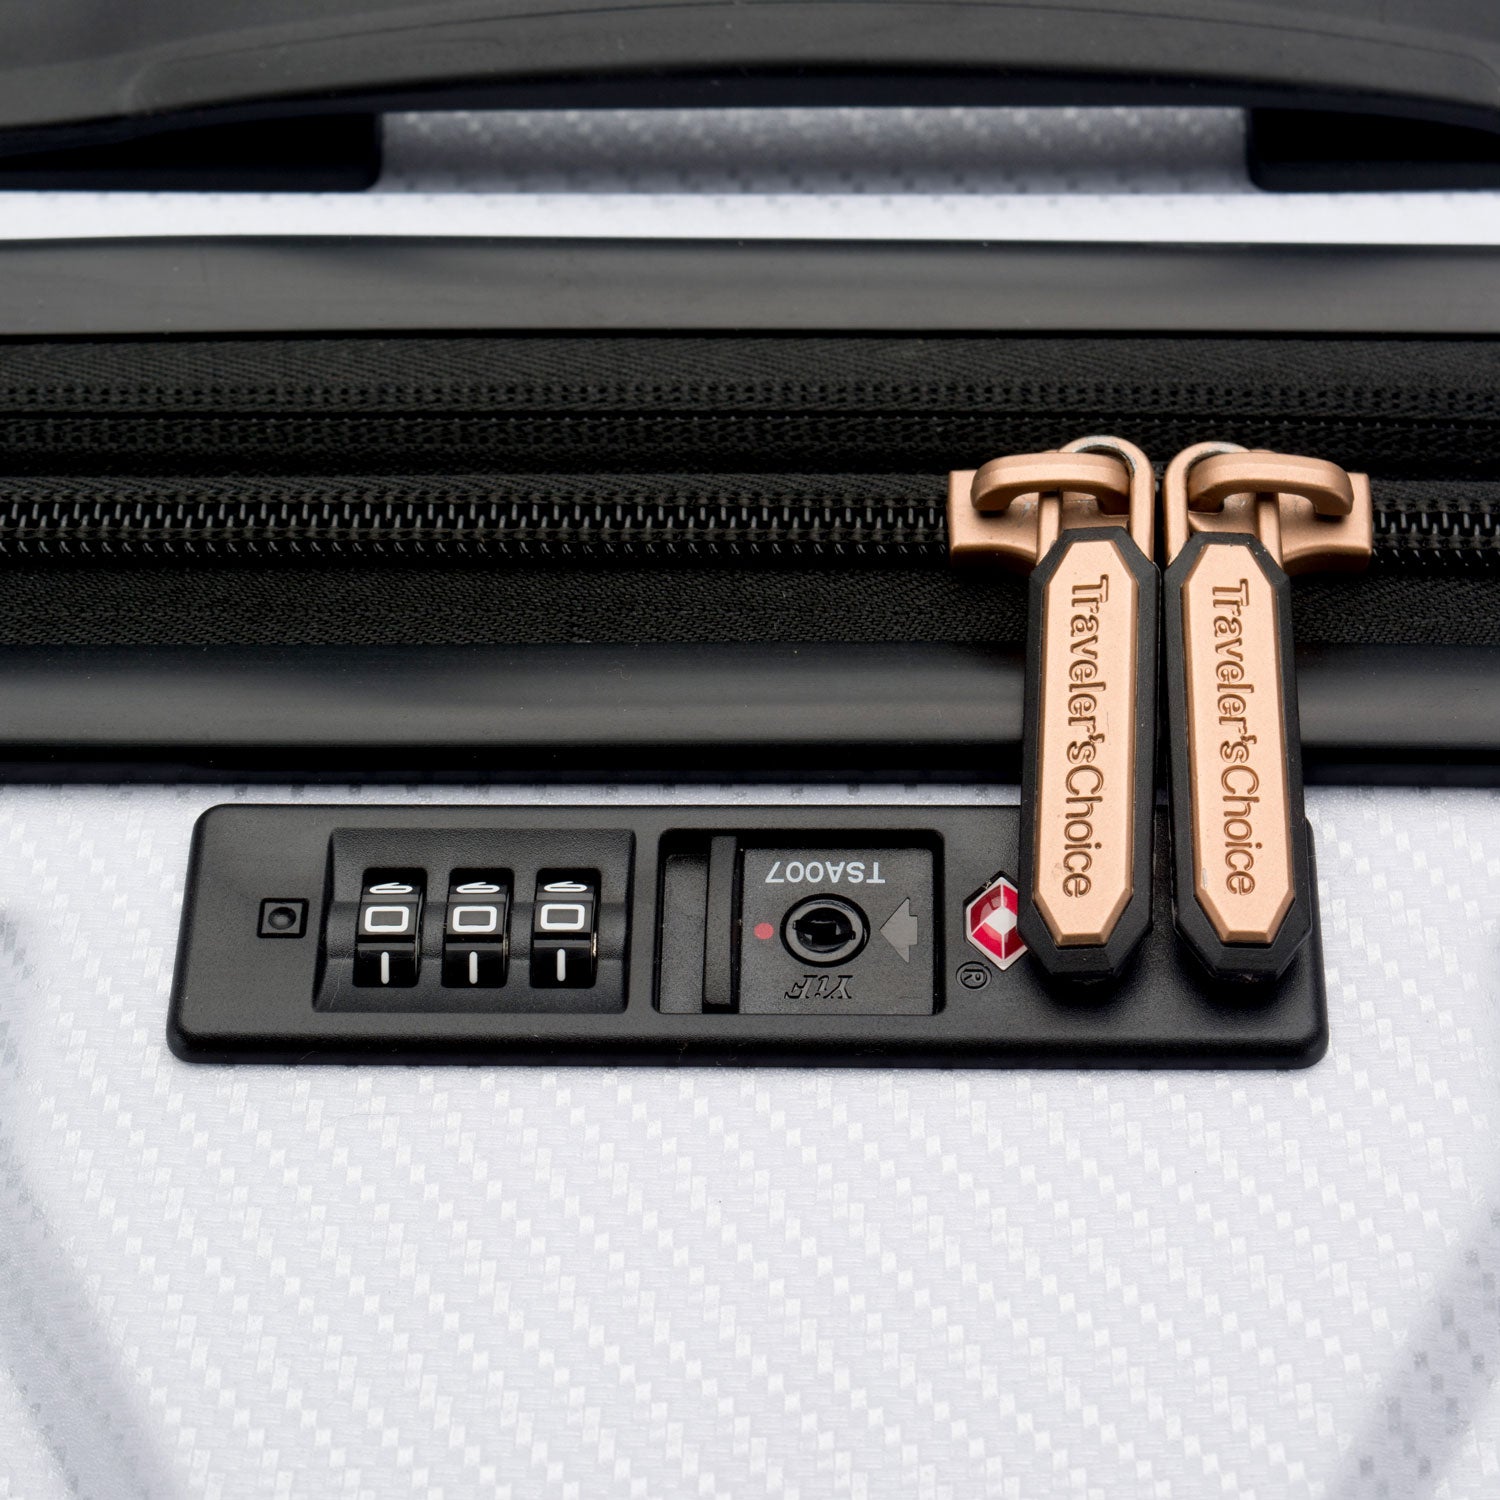 An image of a TSA lock on a white trunk luggage. 